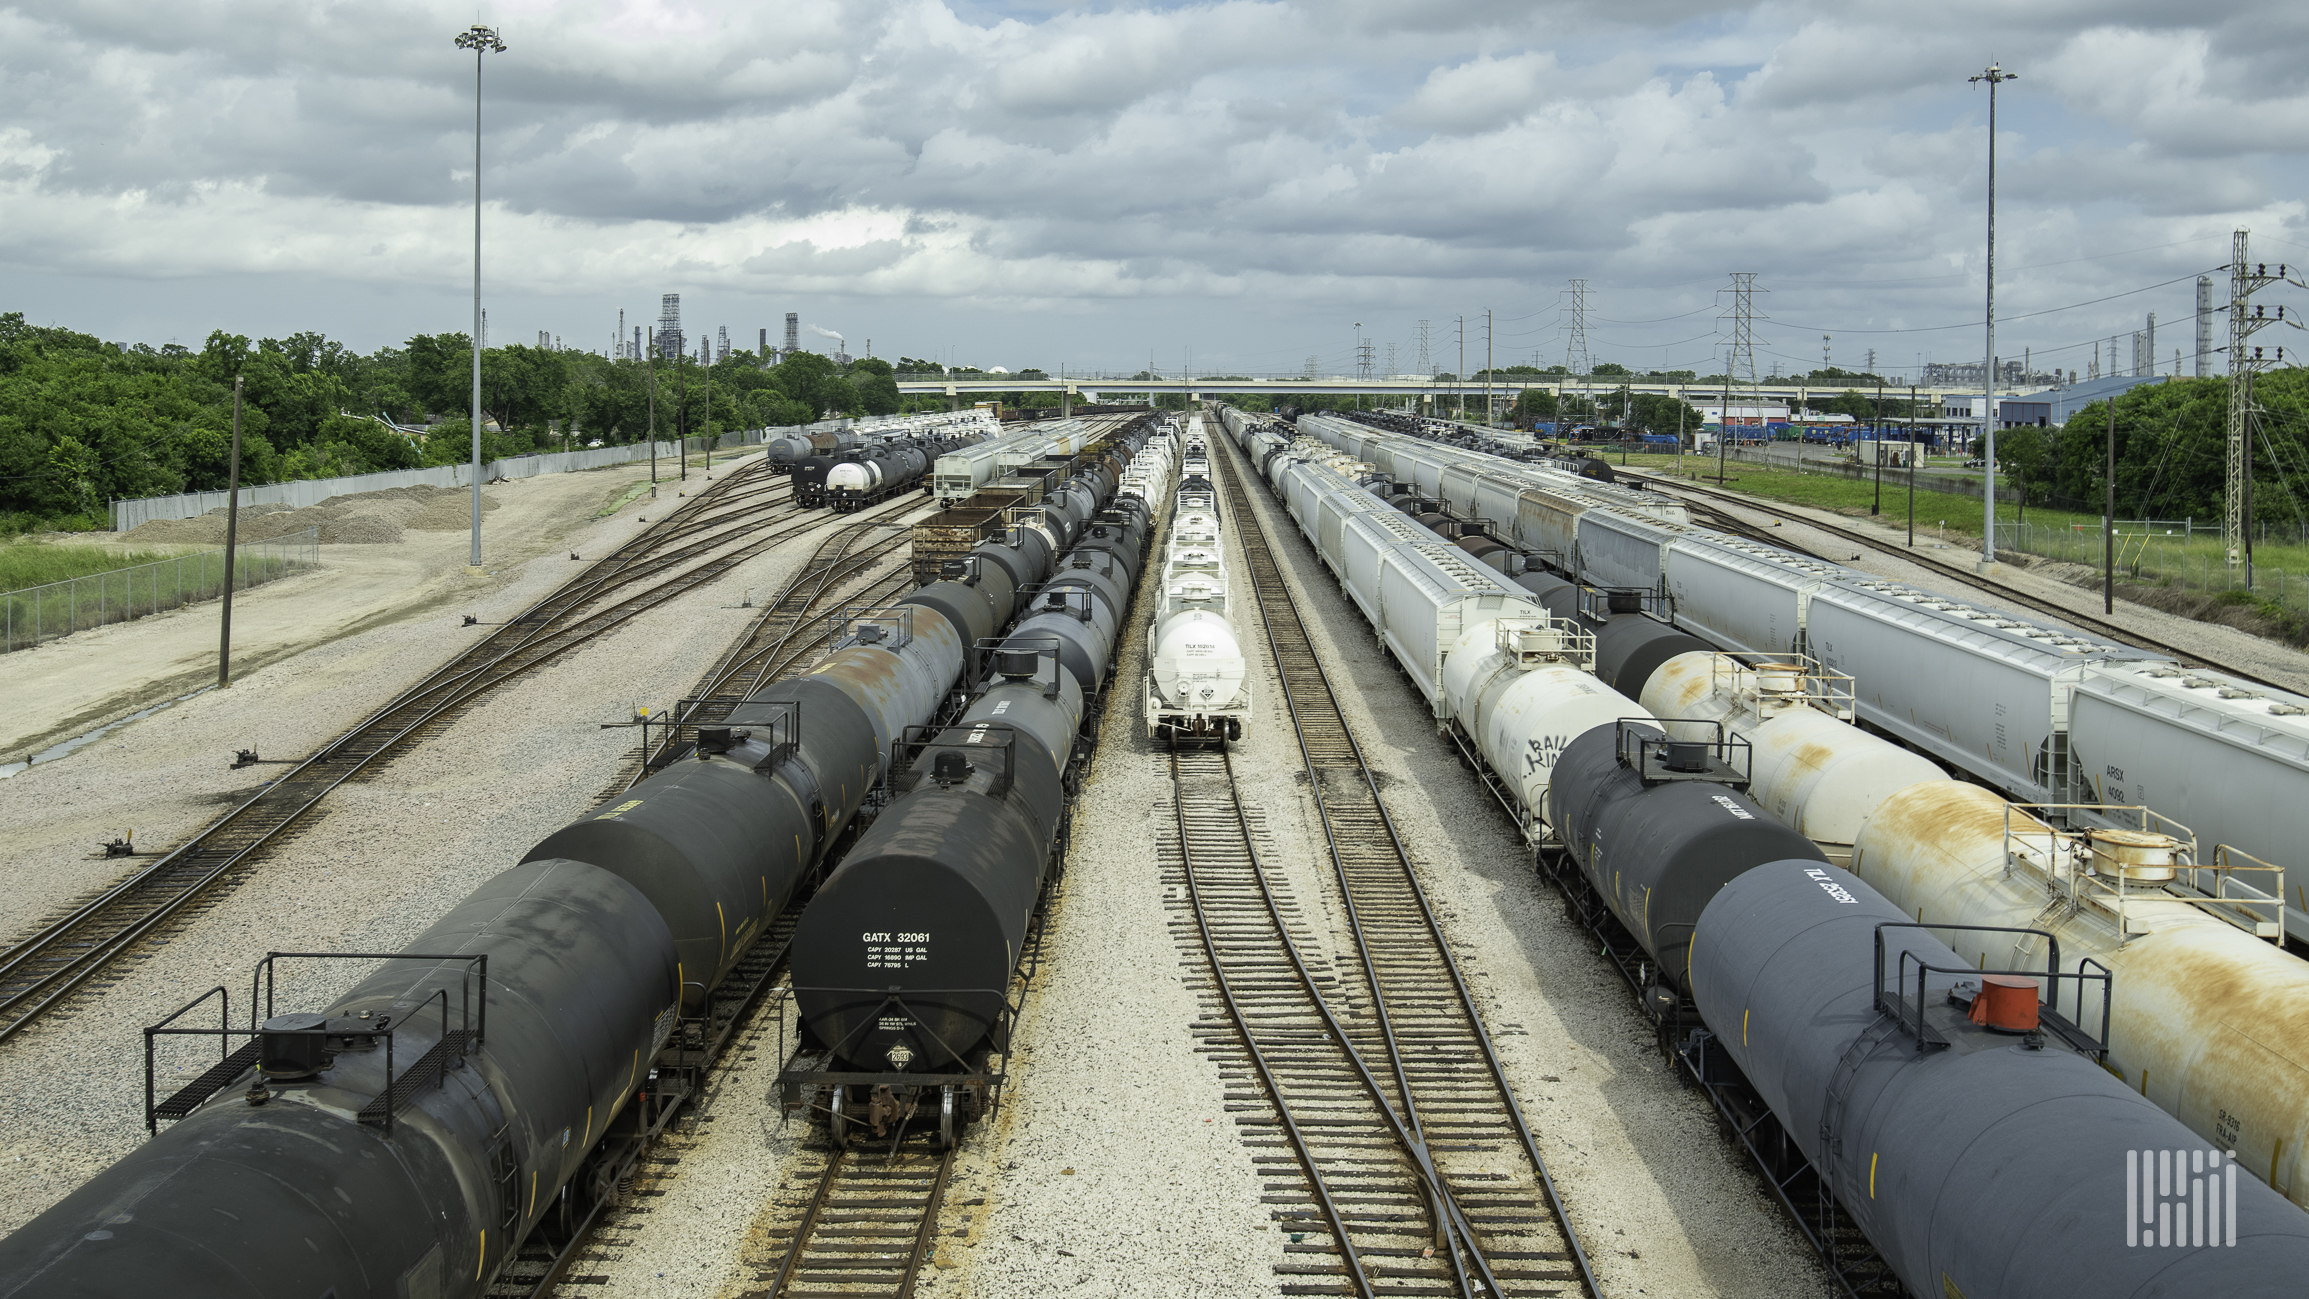 A photograph of a rail yard.